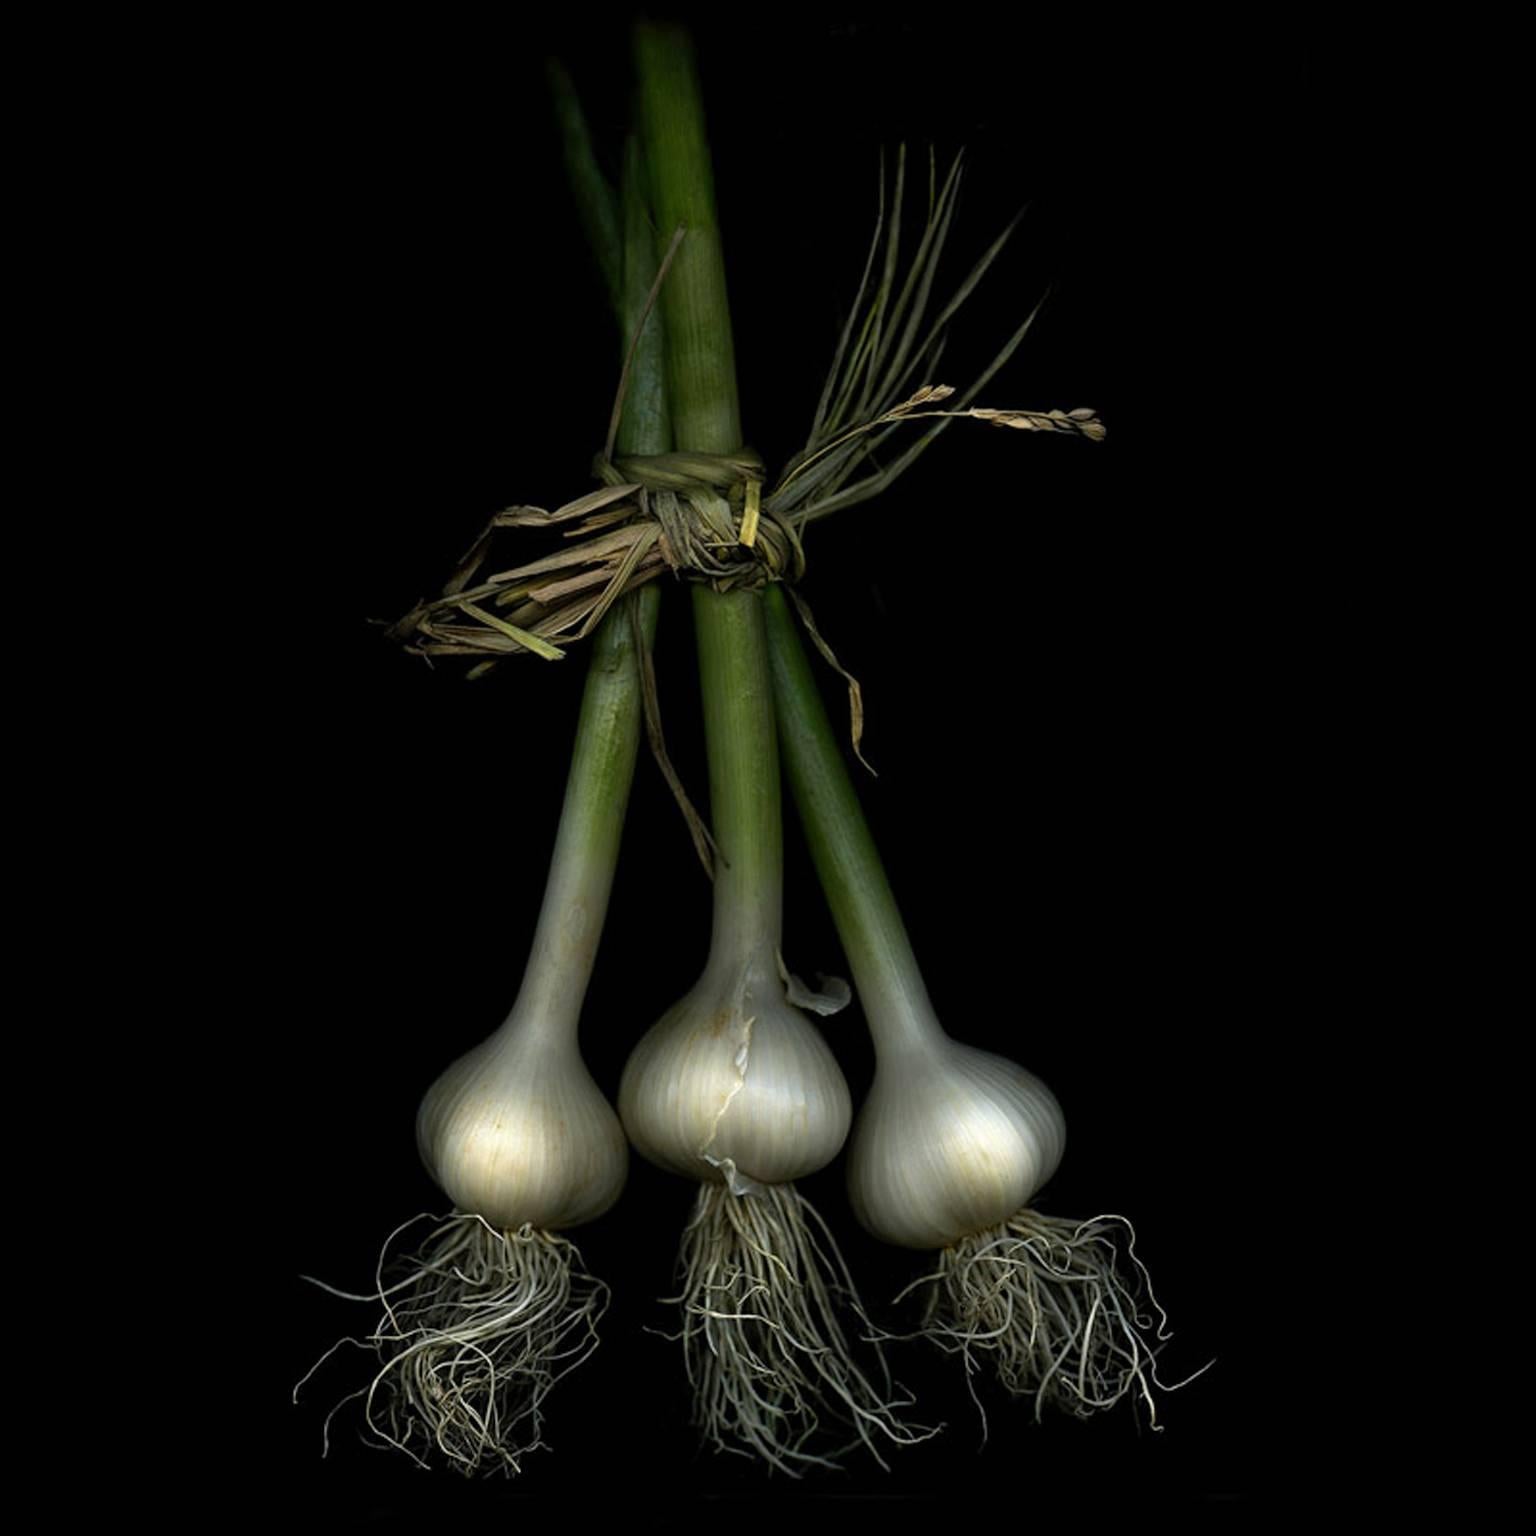 Jerry Freedner Still-Life Photograph - Three Garlic (Modern Vegetable Still Life Photograph of White & Green Garlic)